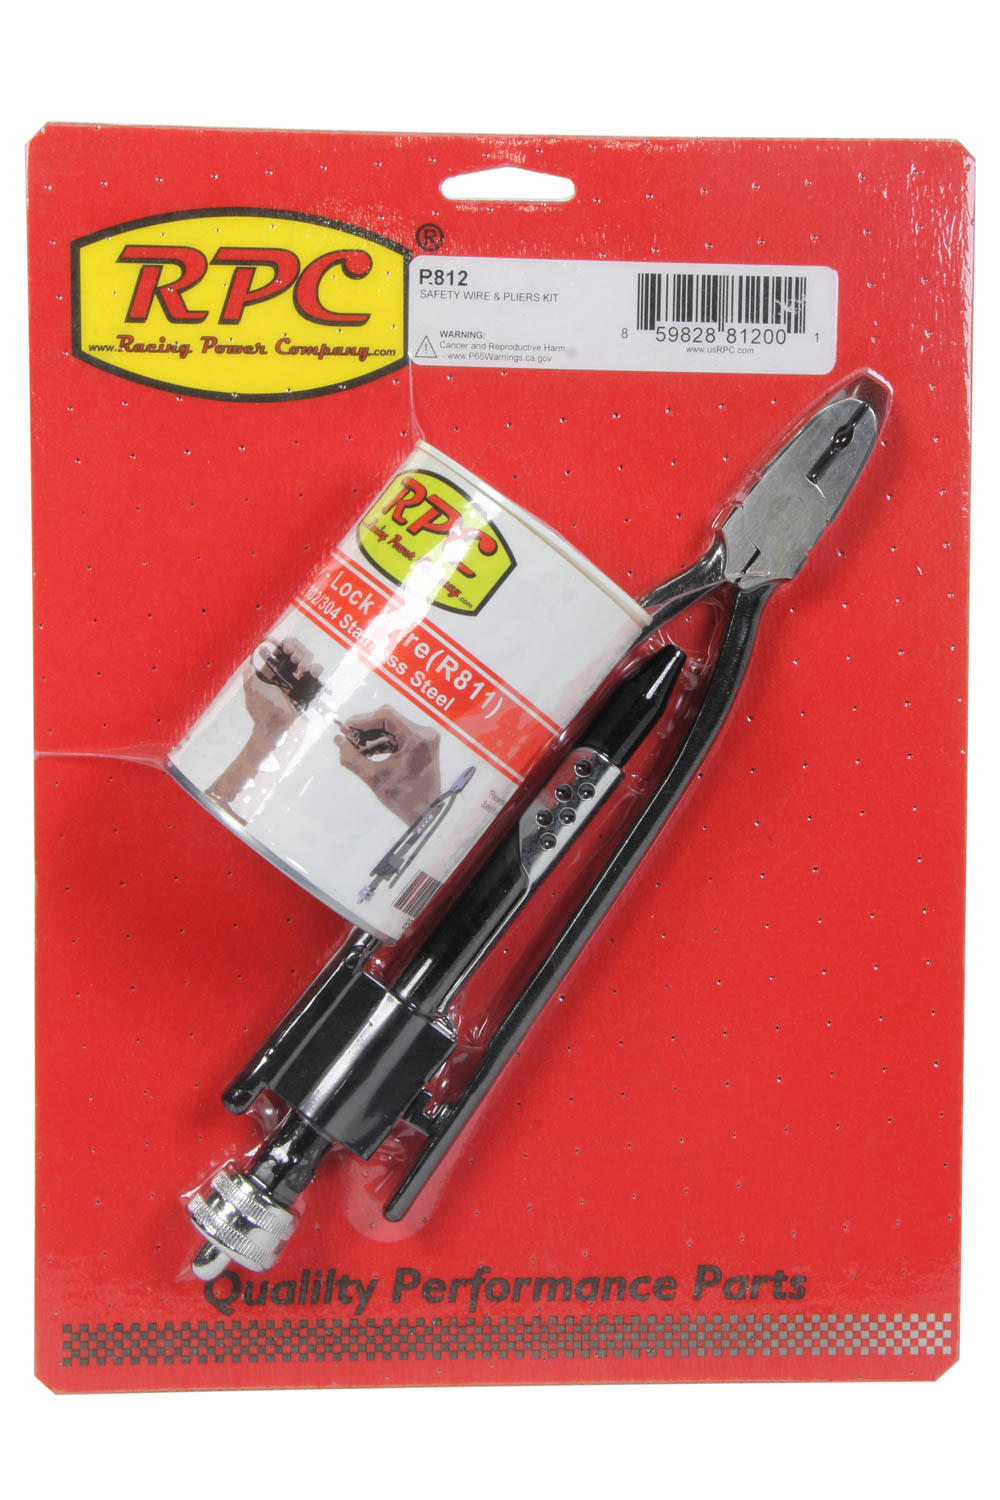 RPC-R812 #1